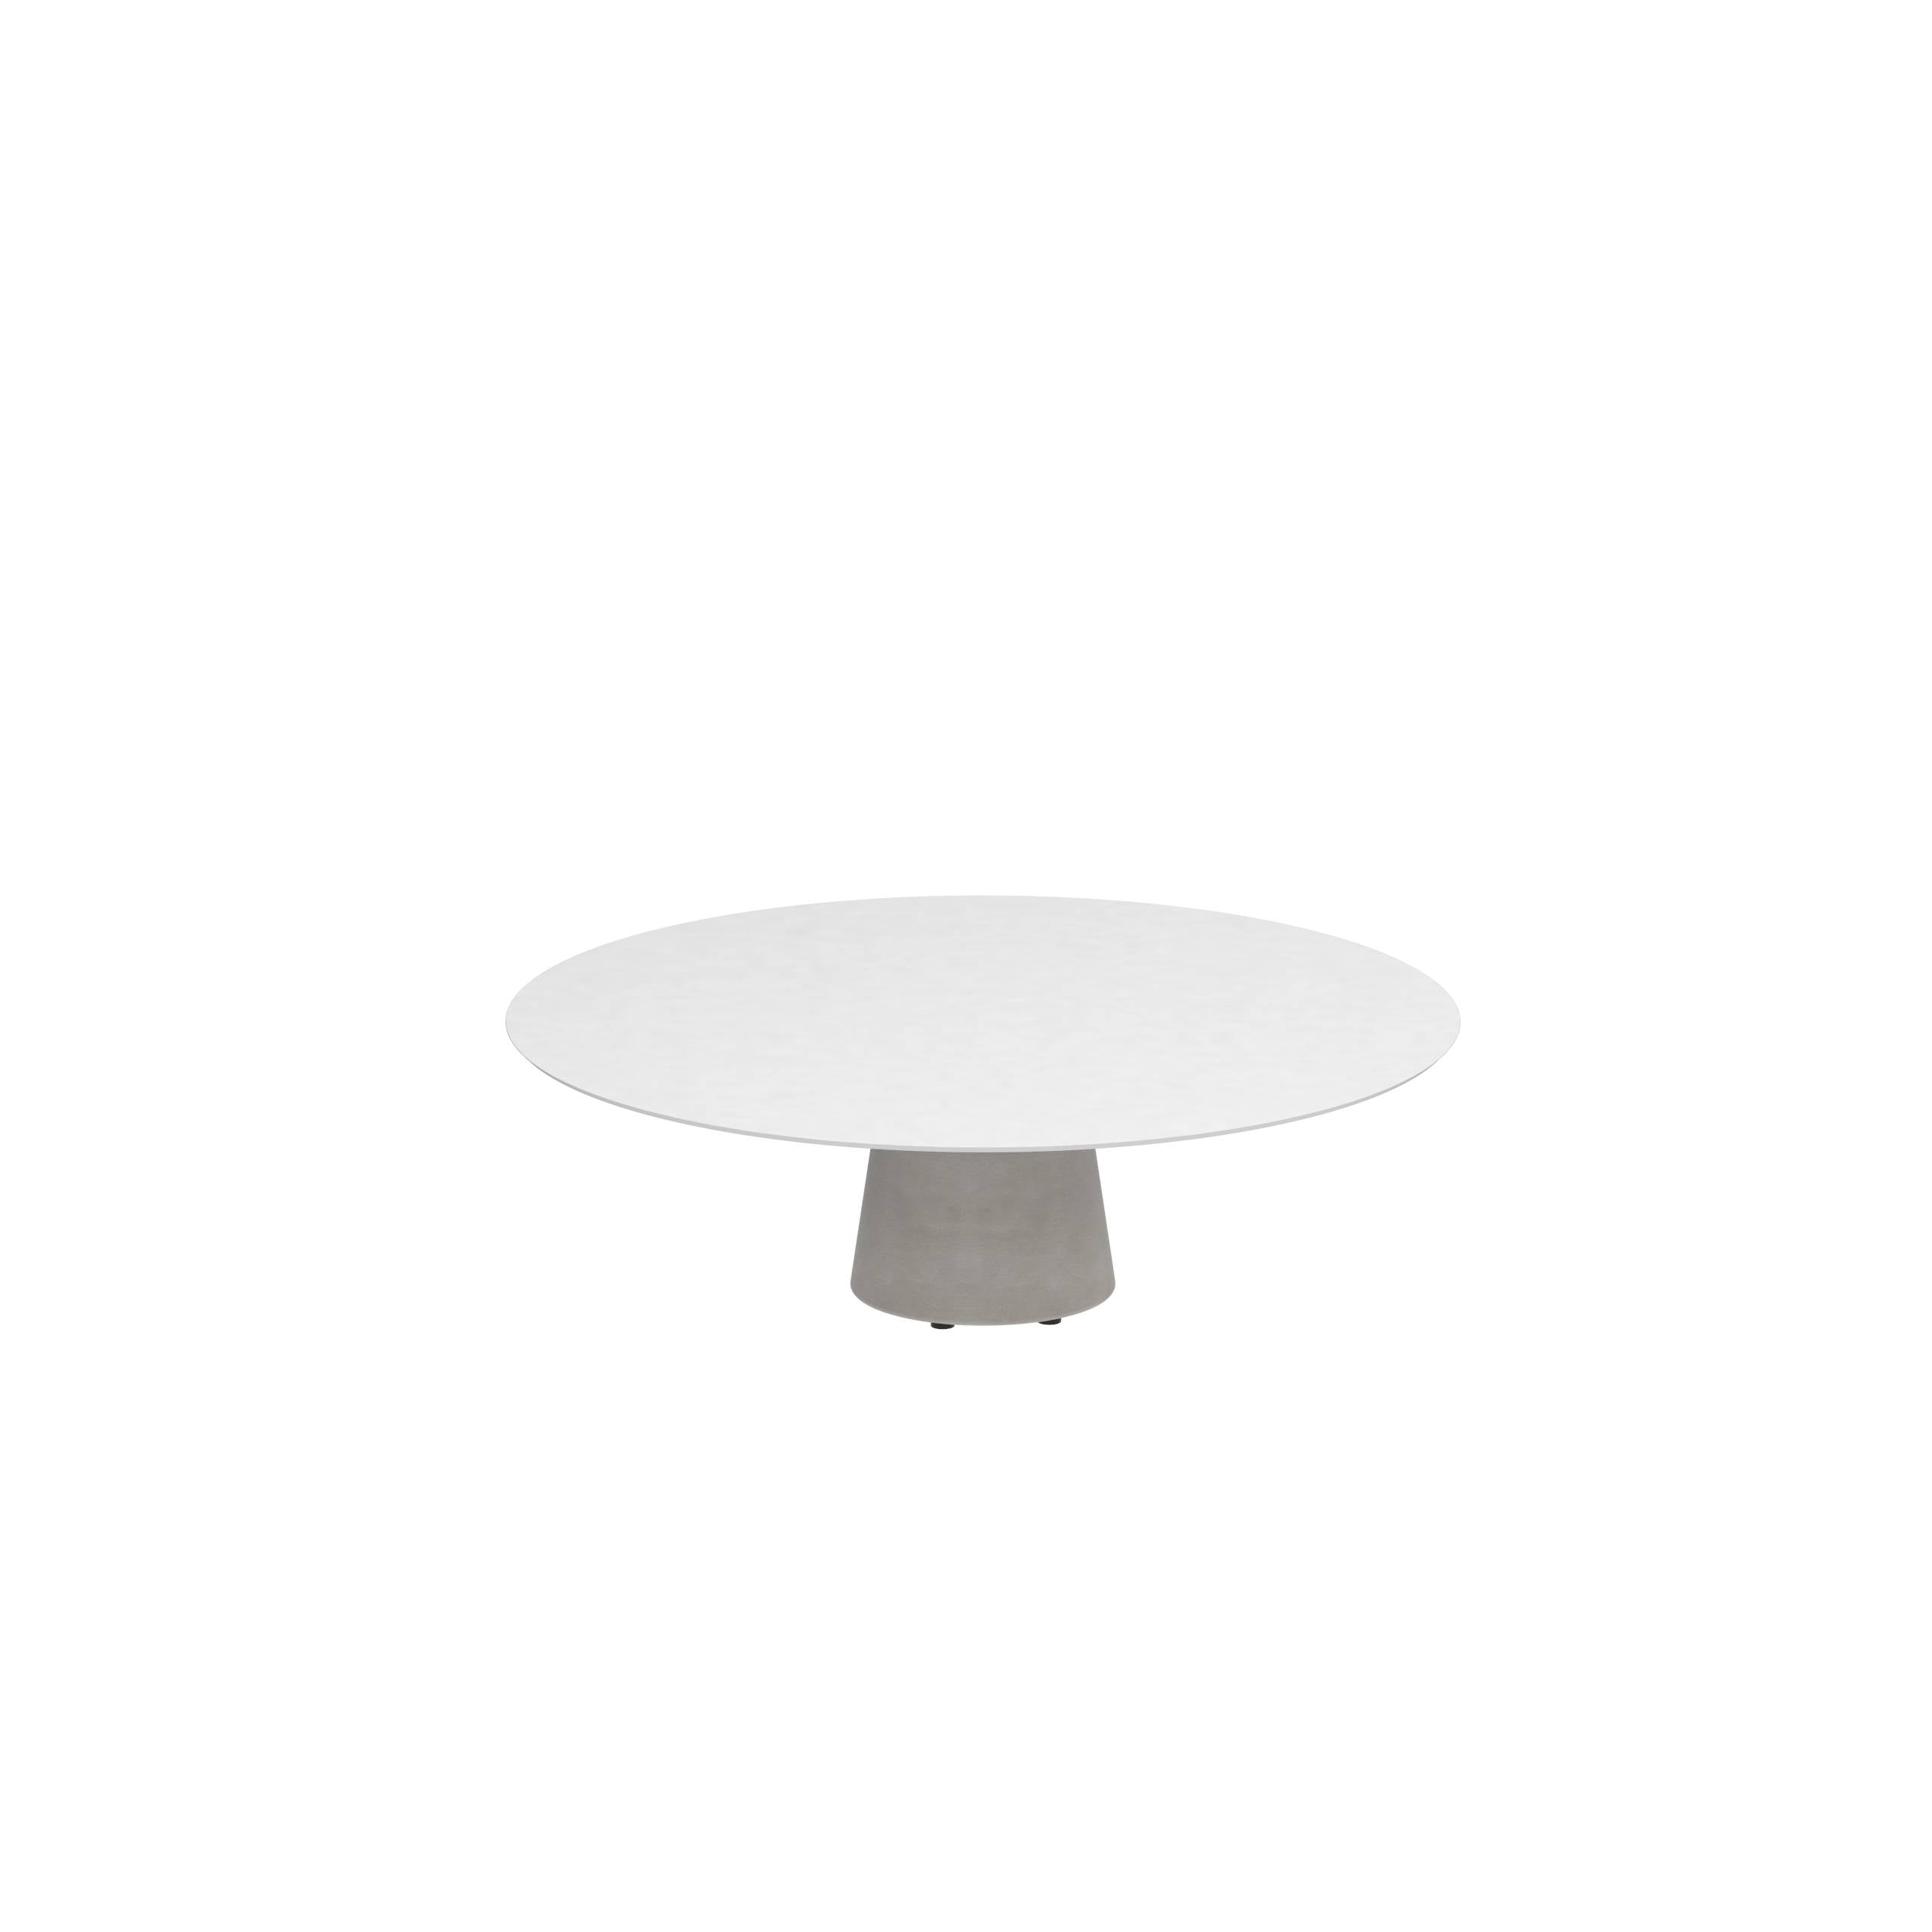 Conix Table Round Ø 160cm High Lounge Leg Concrete Cement Grey - Tabletop Ceramic White